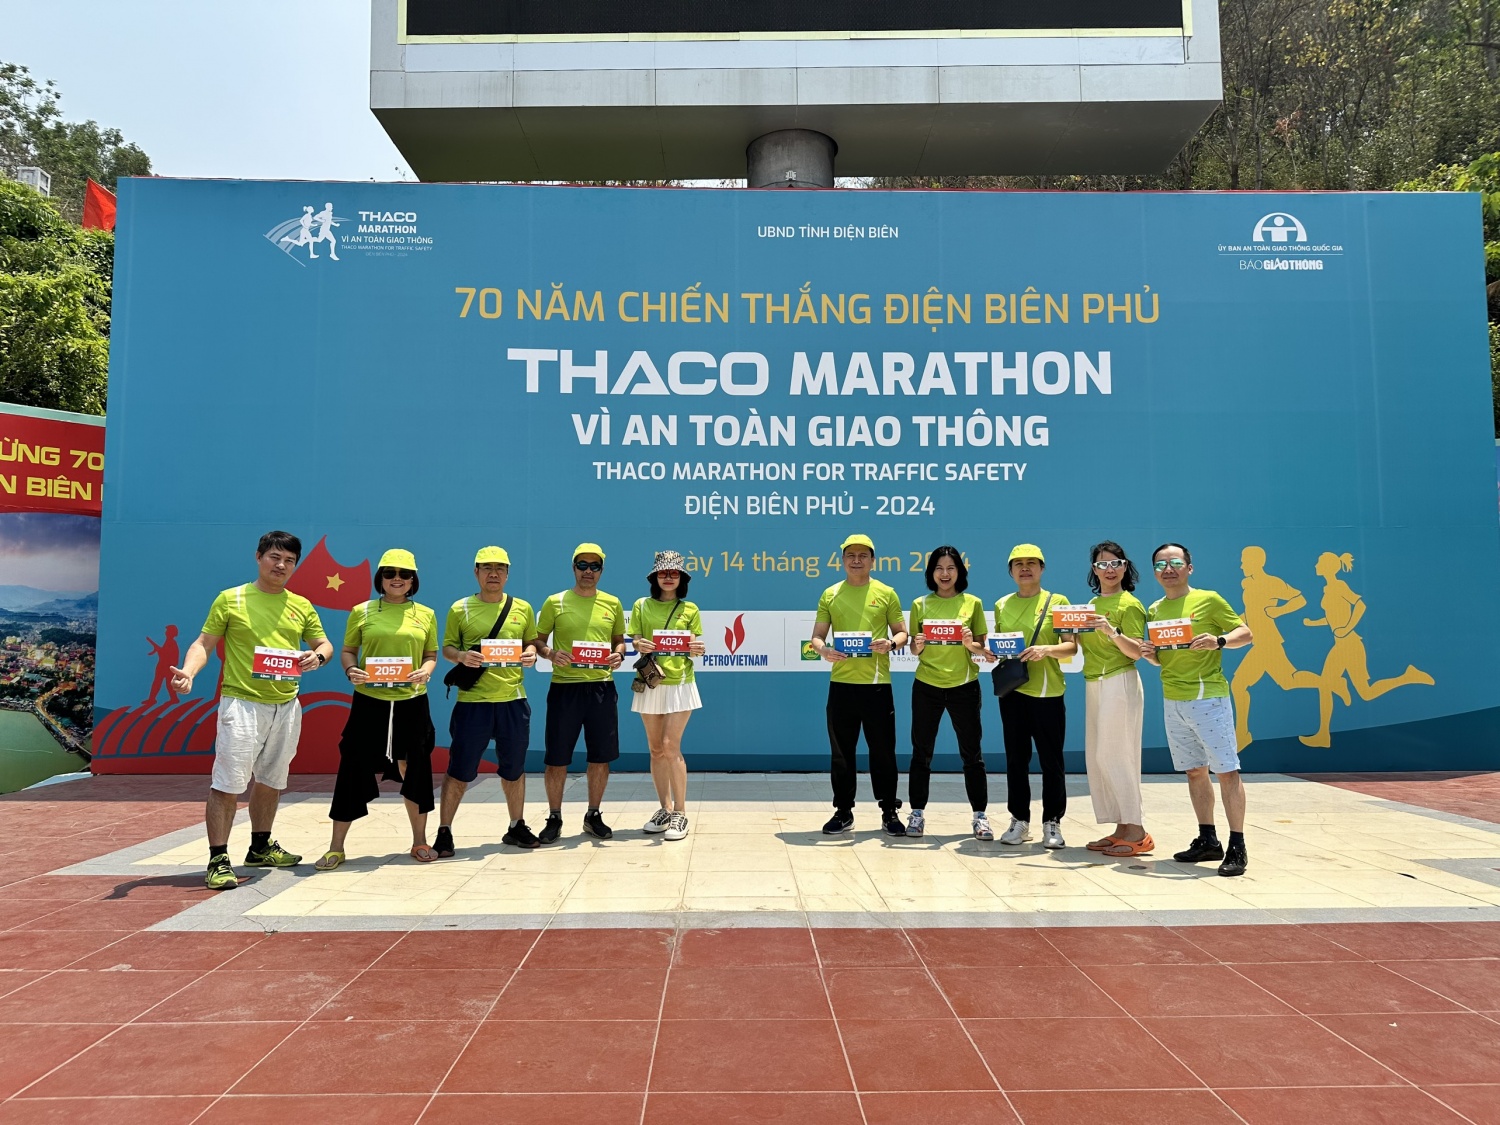 petrovietnam dong hanh cung giai chay thaco marathon vi an toan giao thong  dien bien phu 2024 hinh 3